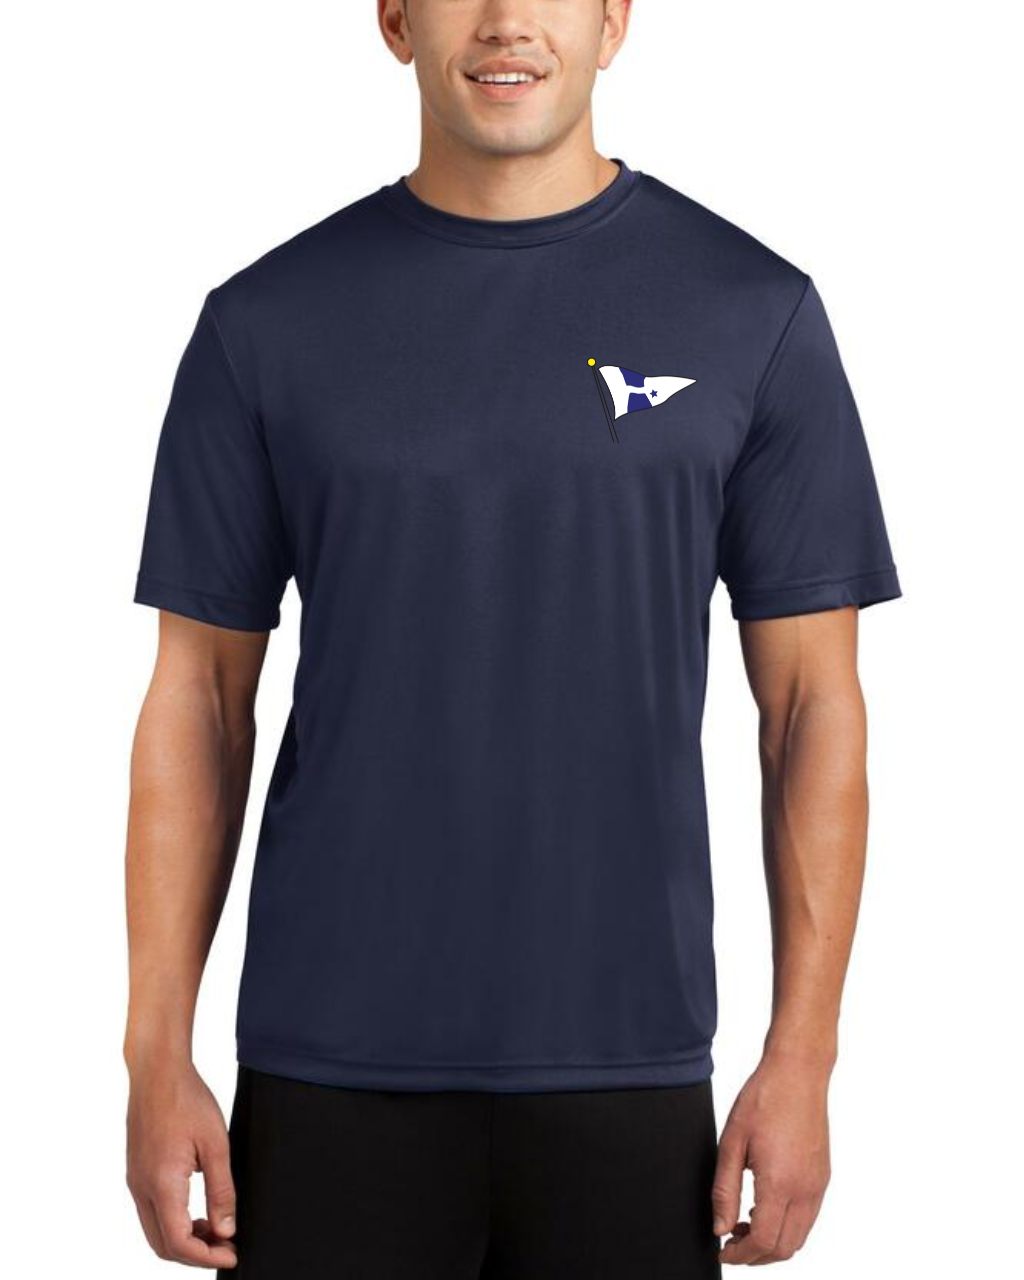 WYC Short Sleeve UV Wicking Shirt